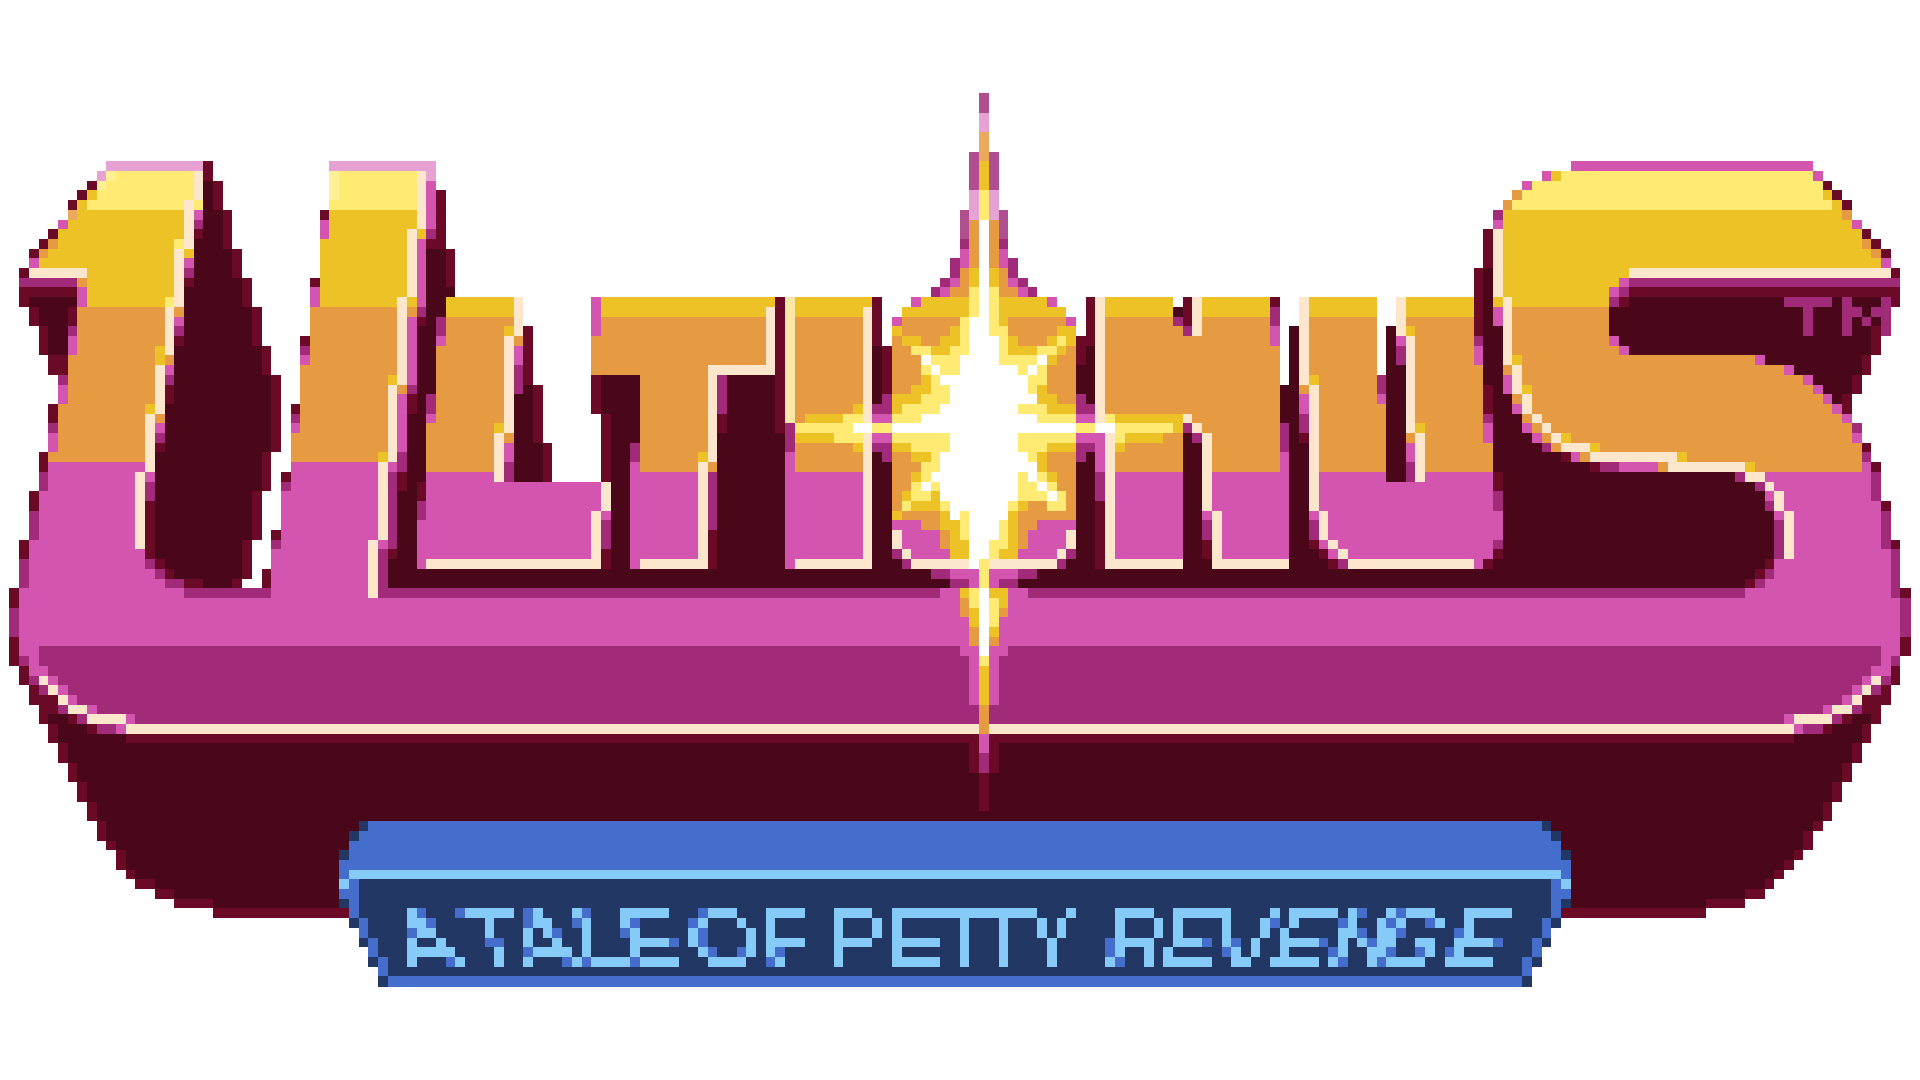 Ultionus: A Tale of Petty Revenge Logo